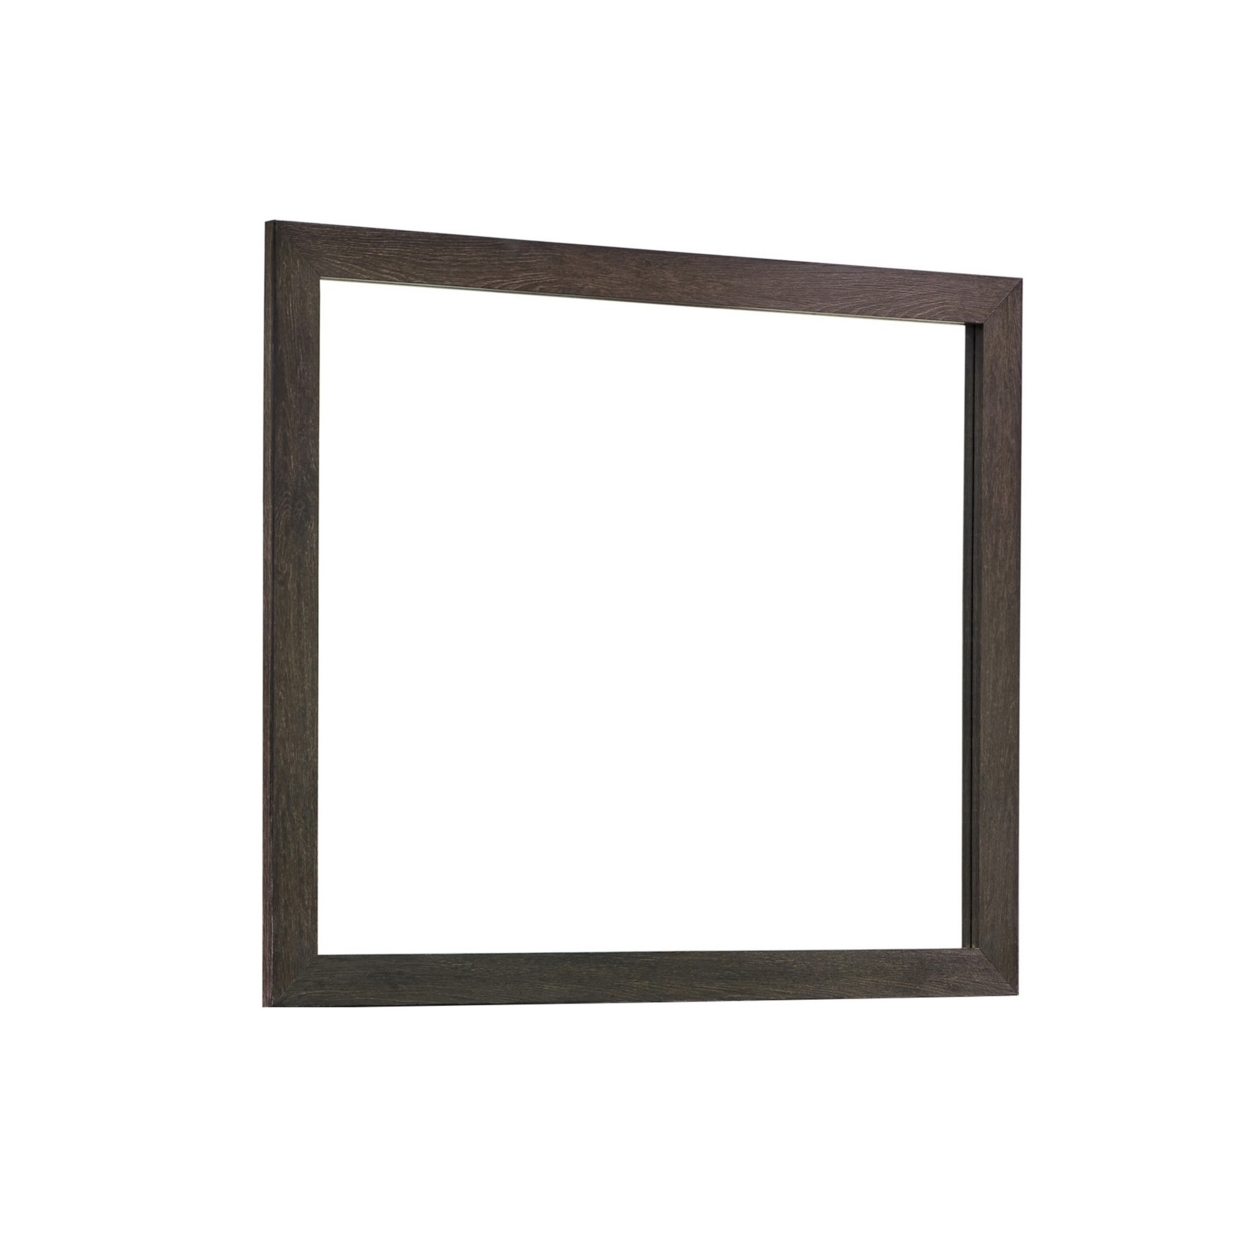 Mirror With Wooden Frame And Mounting Hardware, Dark Brown- Saltoro Sherpi